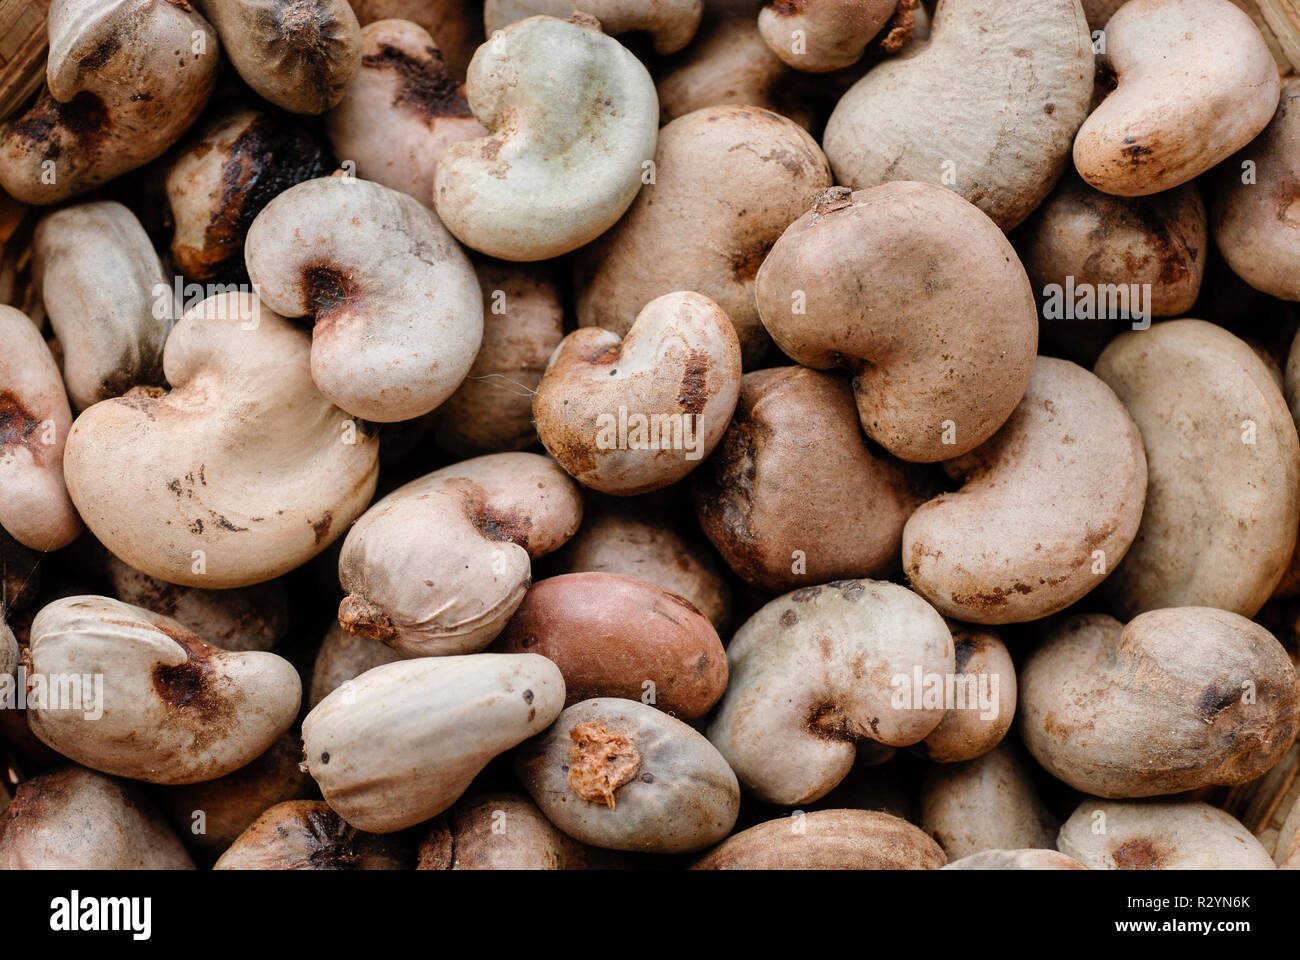 BURKINA FASO, Banfora , Sotria B Sarl factory for cashew nut processing, raw unhulled cashew nuts with shell Stock Photo